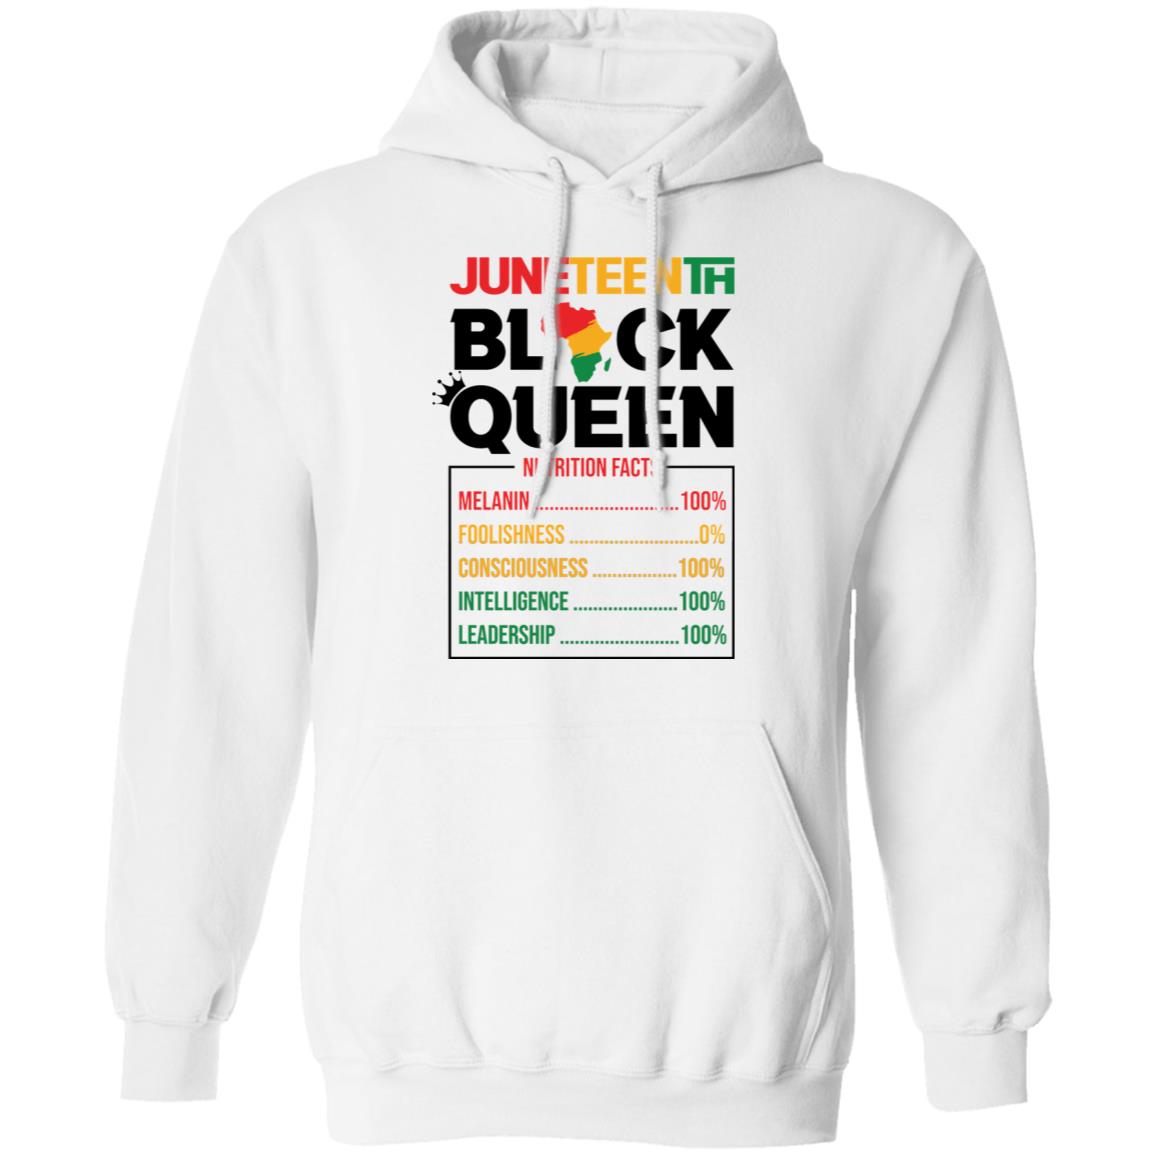 Juneteenth Black Queen Nutrition Facts T-shirt Apparel Gearment Unisex Hoodie White S